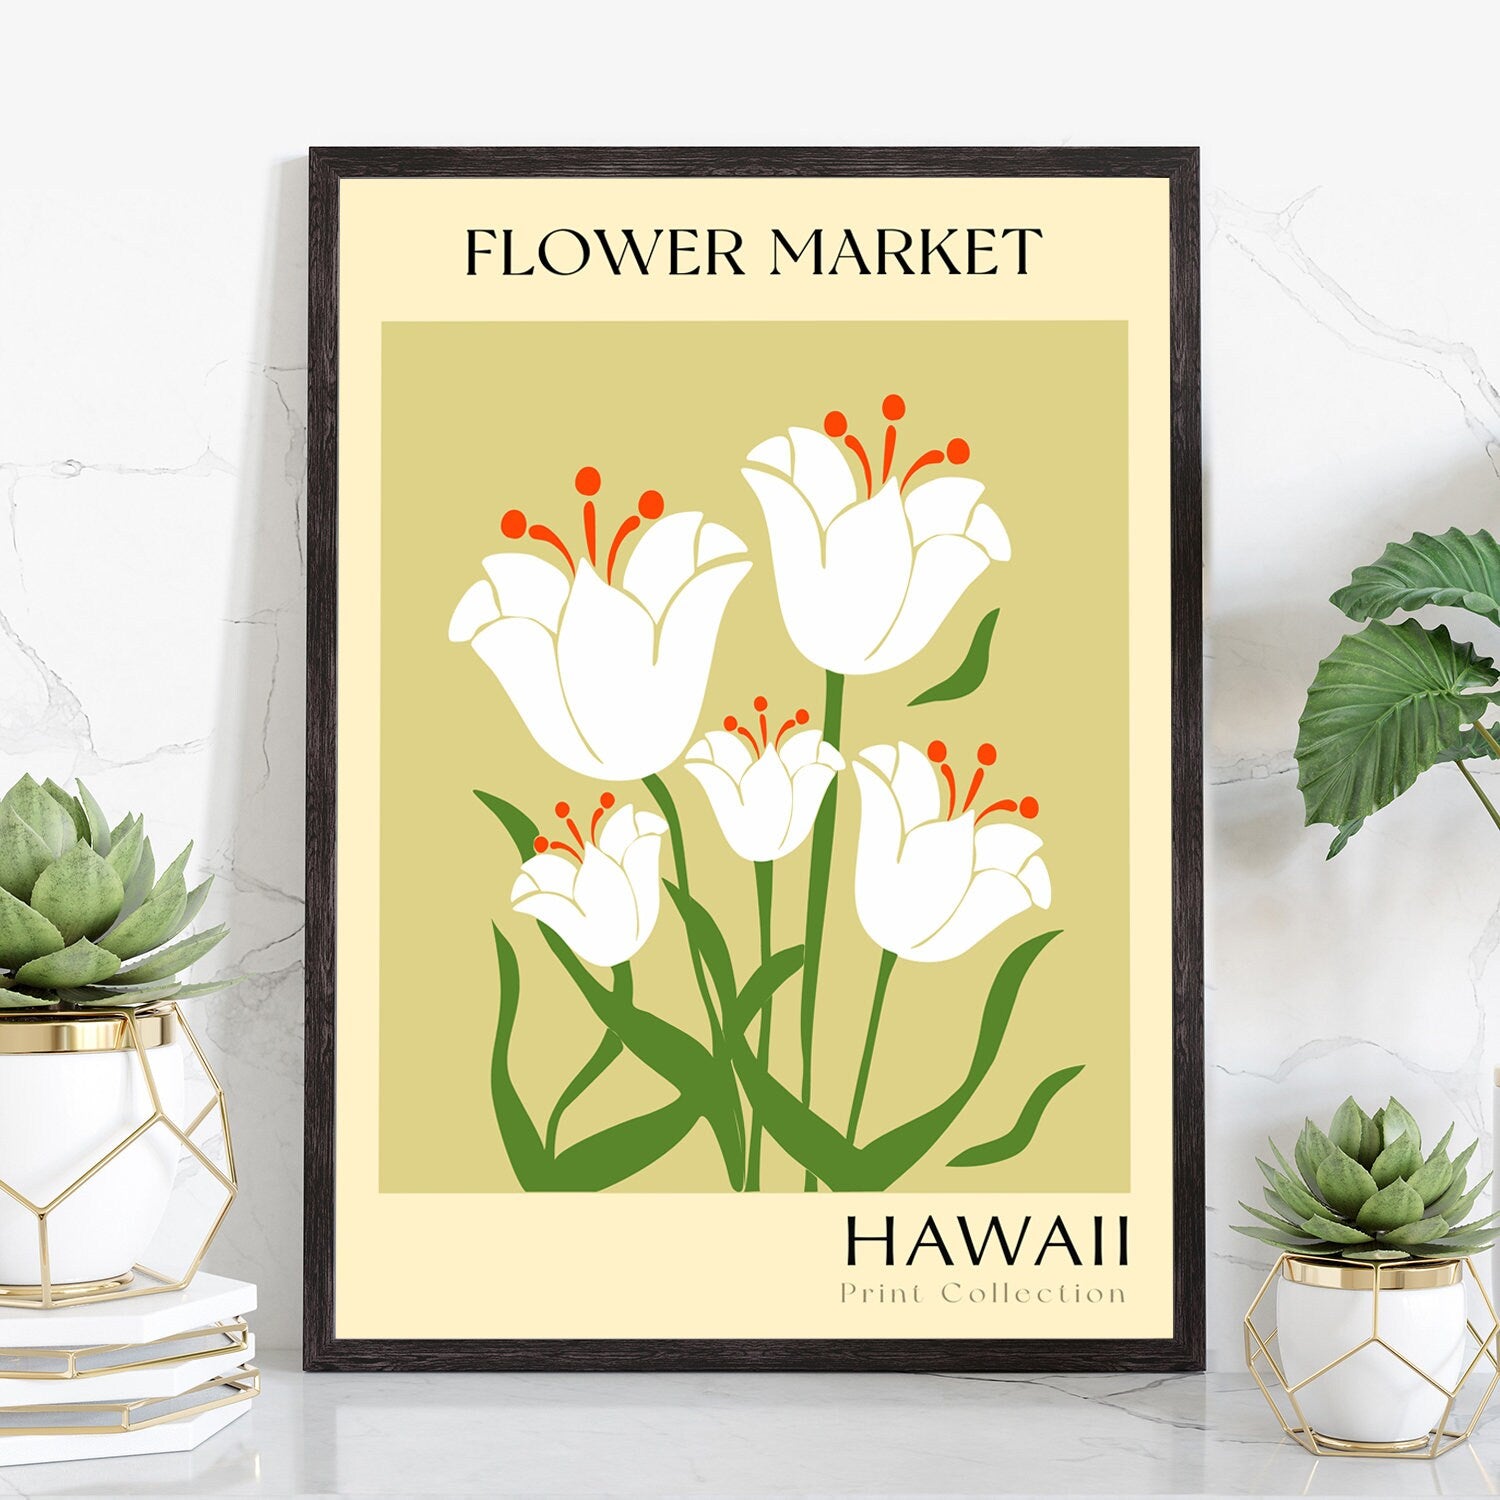 Hawaii flower print, USA states poster, Hawaii flower market poster, Botanical posters, Nature poster artwork, Boho floral wall art